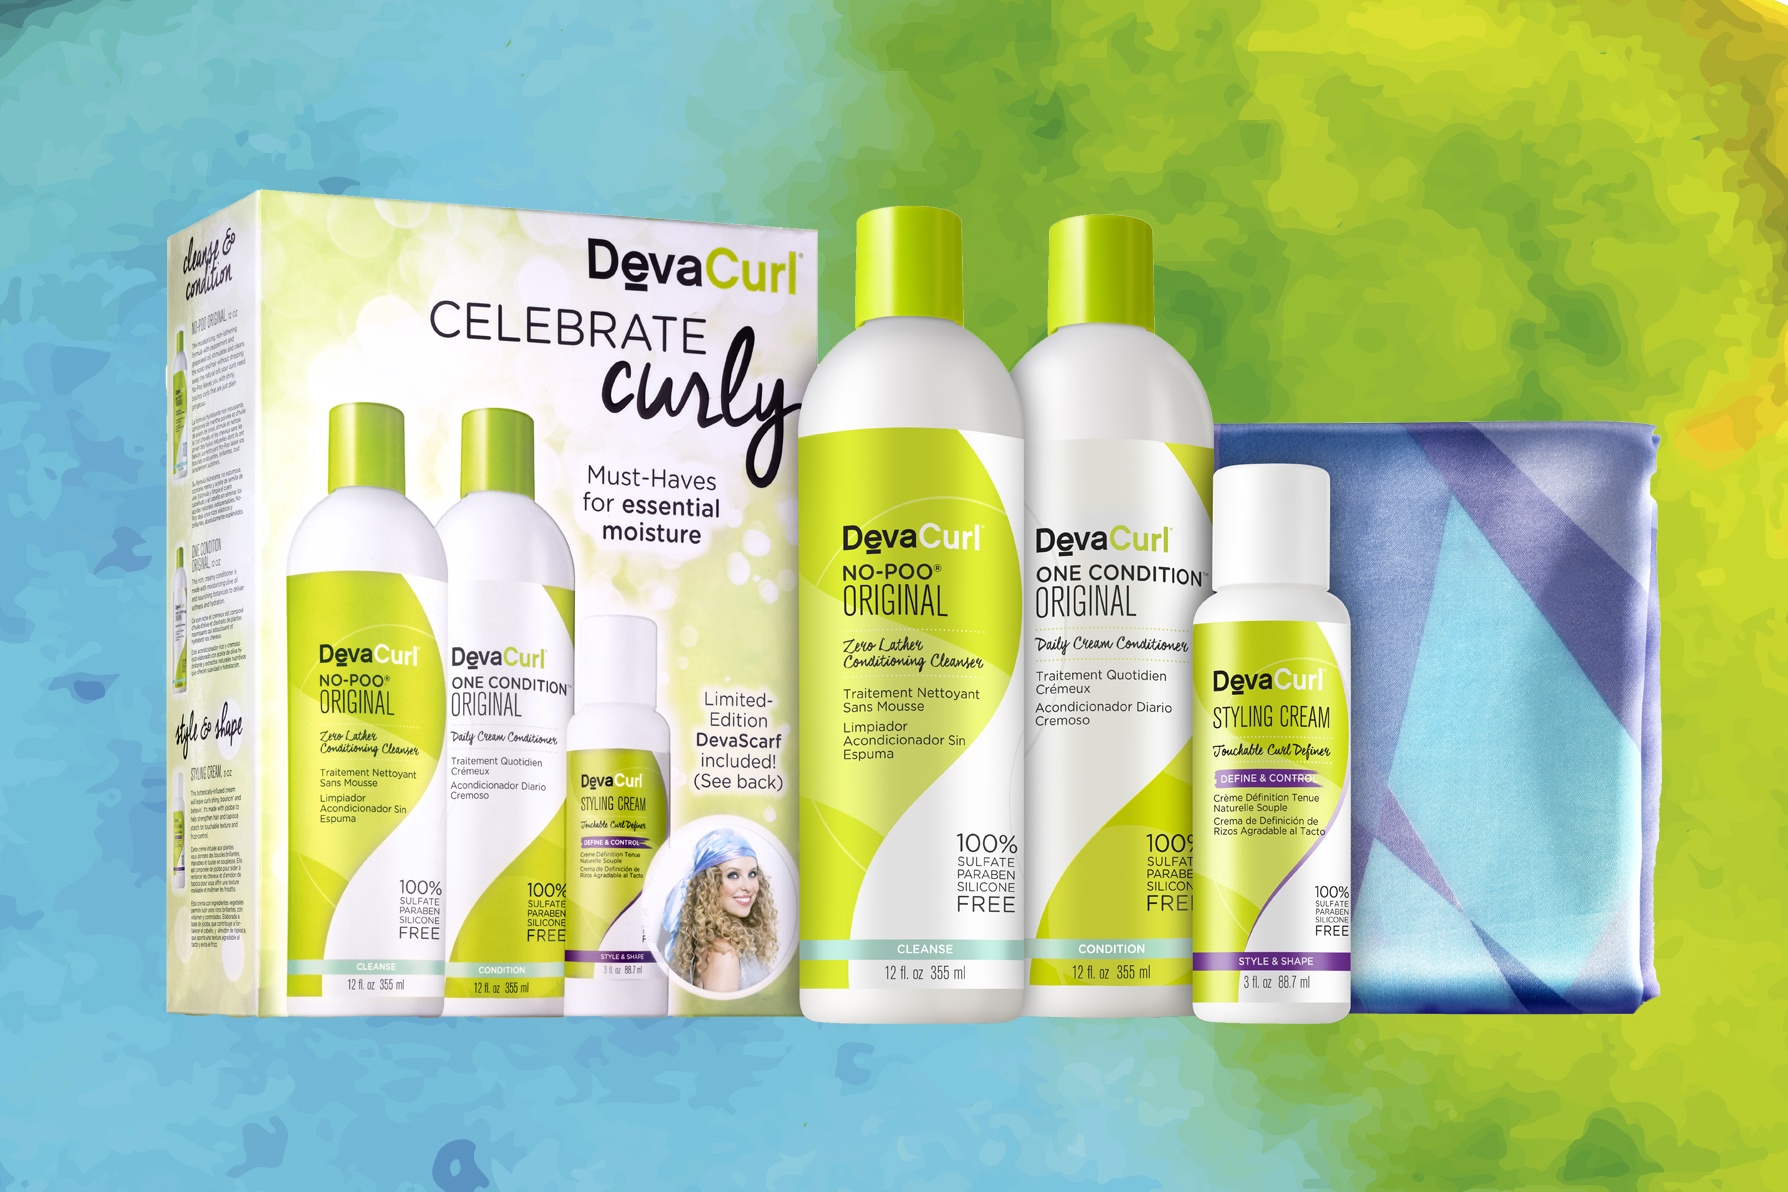 DevaCurl products